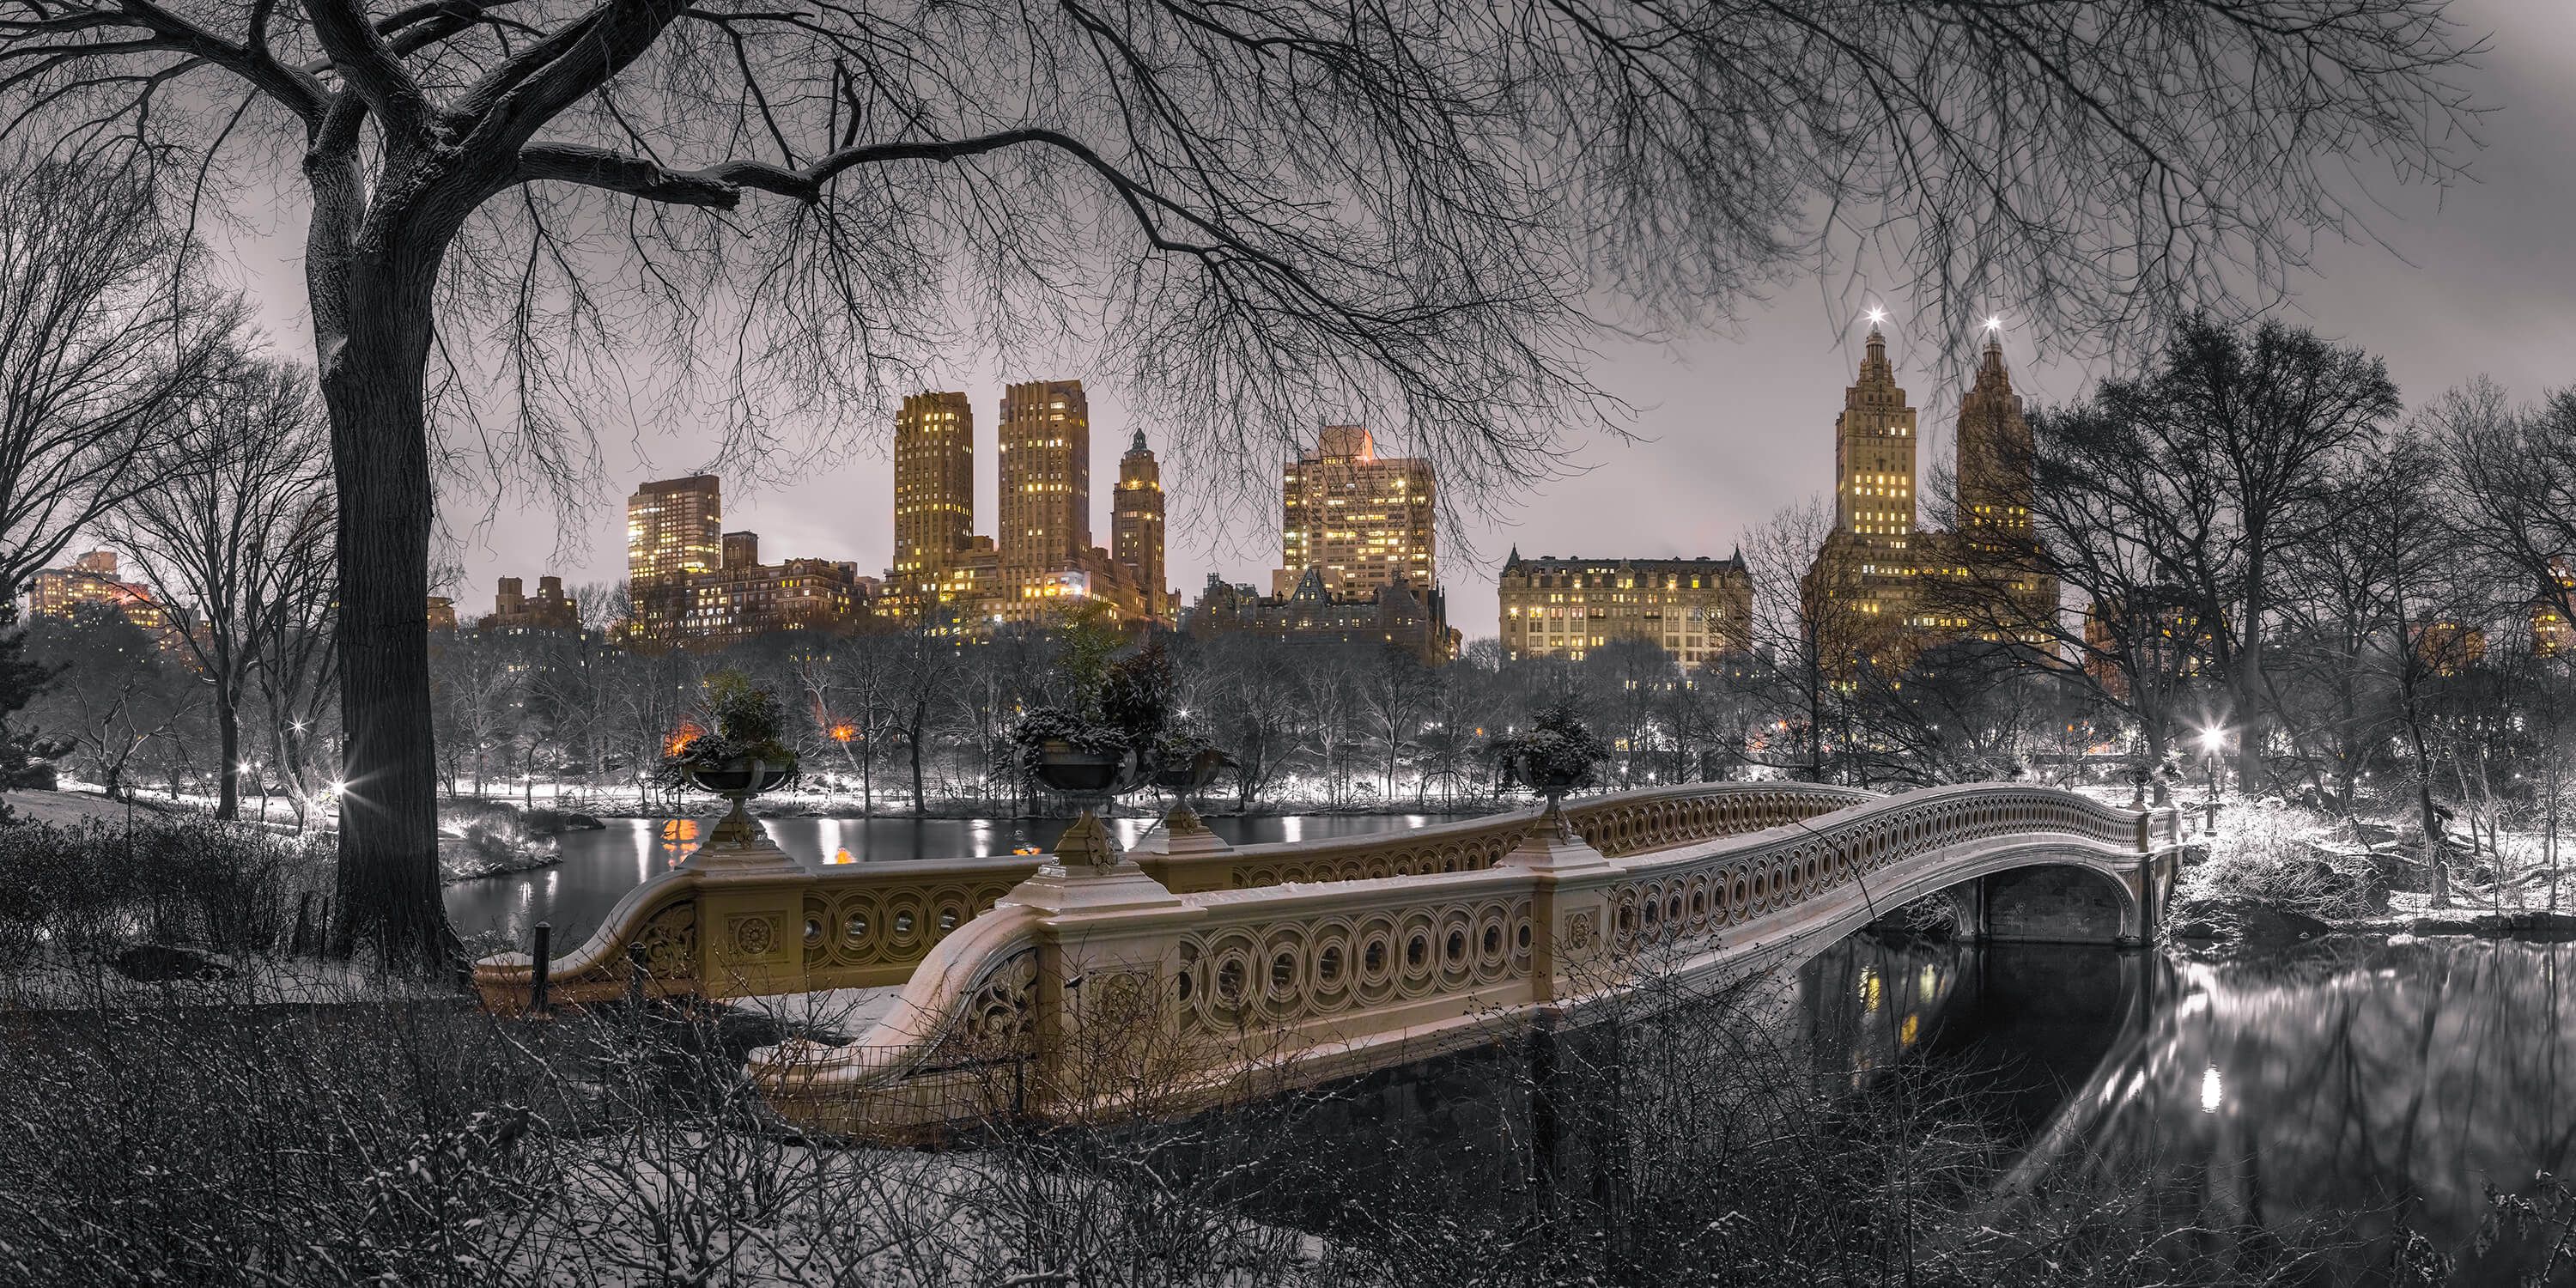  Papel pintado con Central Park y Manhattan - Salón